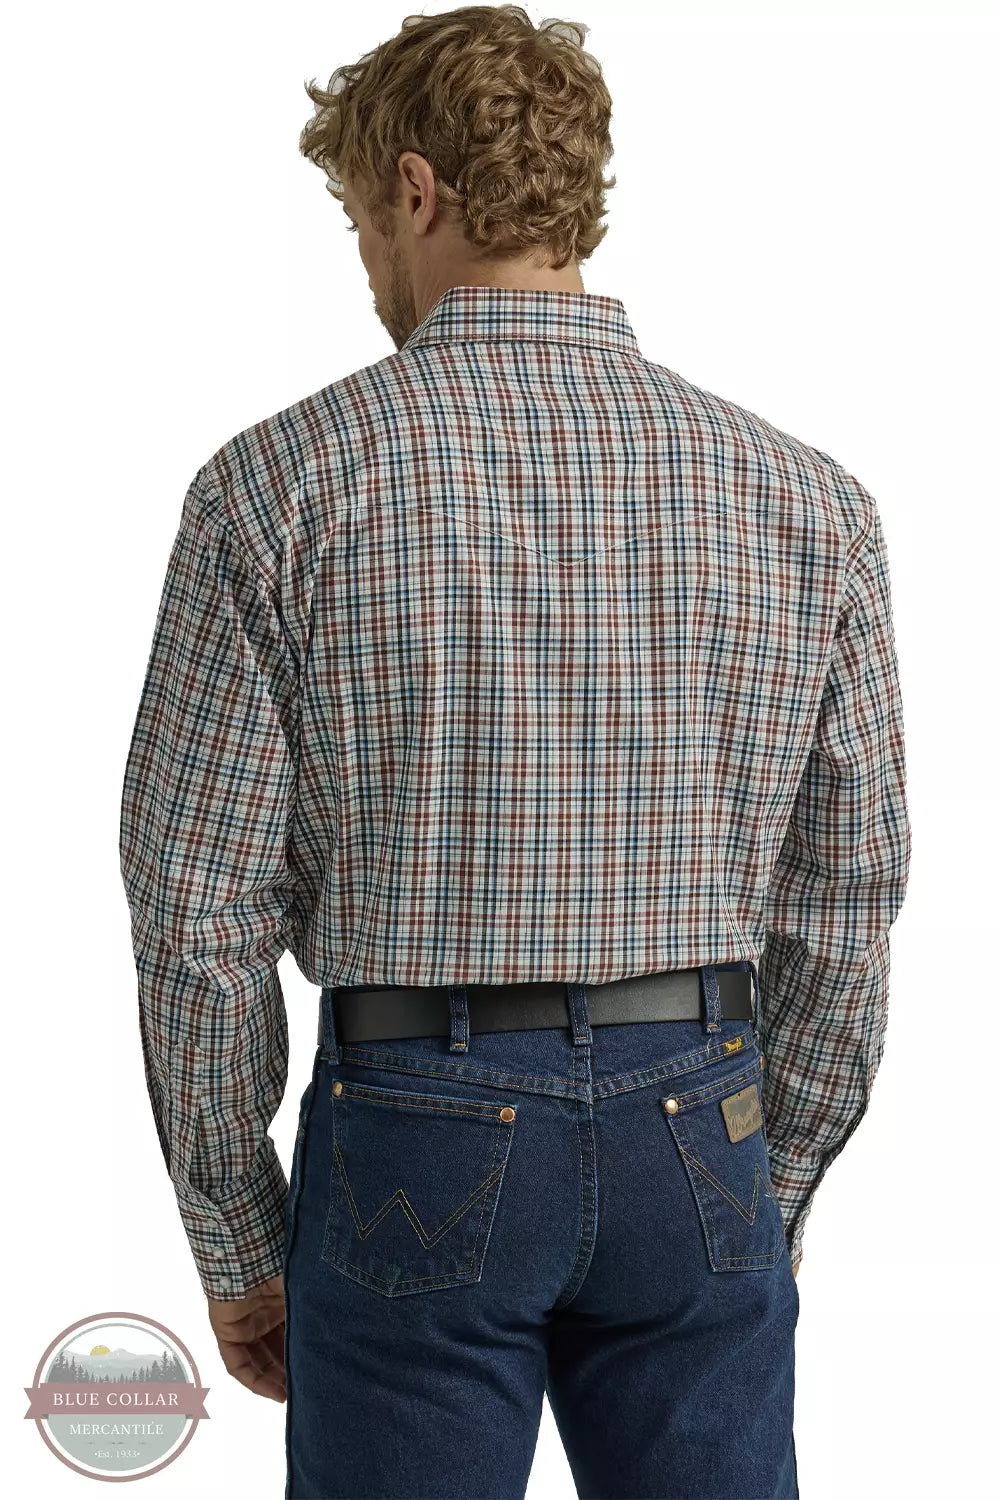 Wrangler 112330342 Wrinkle Resistant Long Sleeve Western Snap Shirt in Brown Plaid Back View